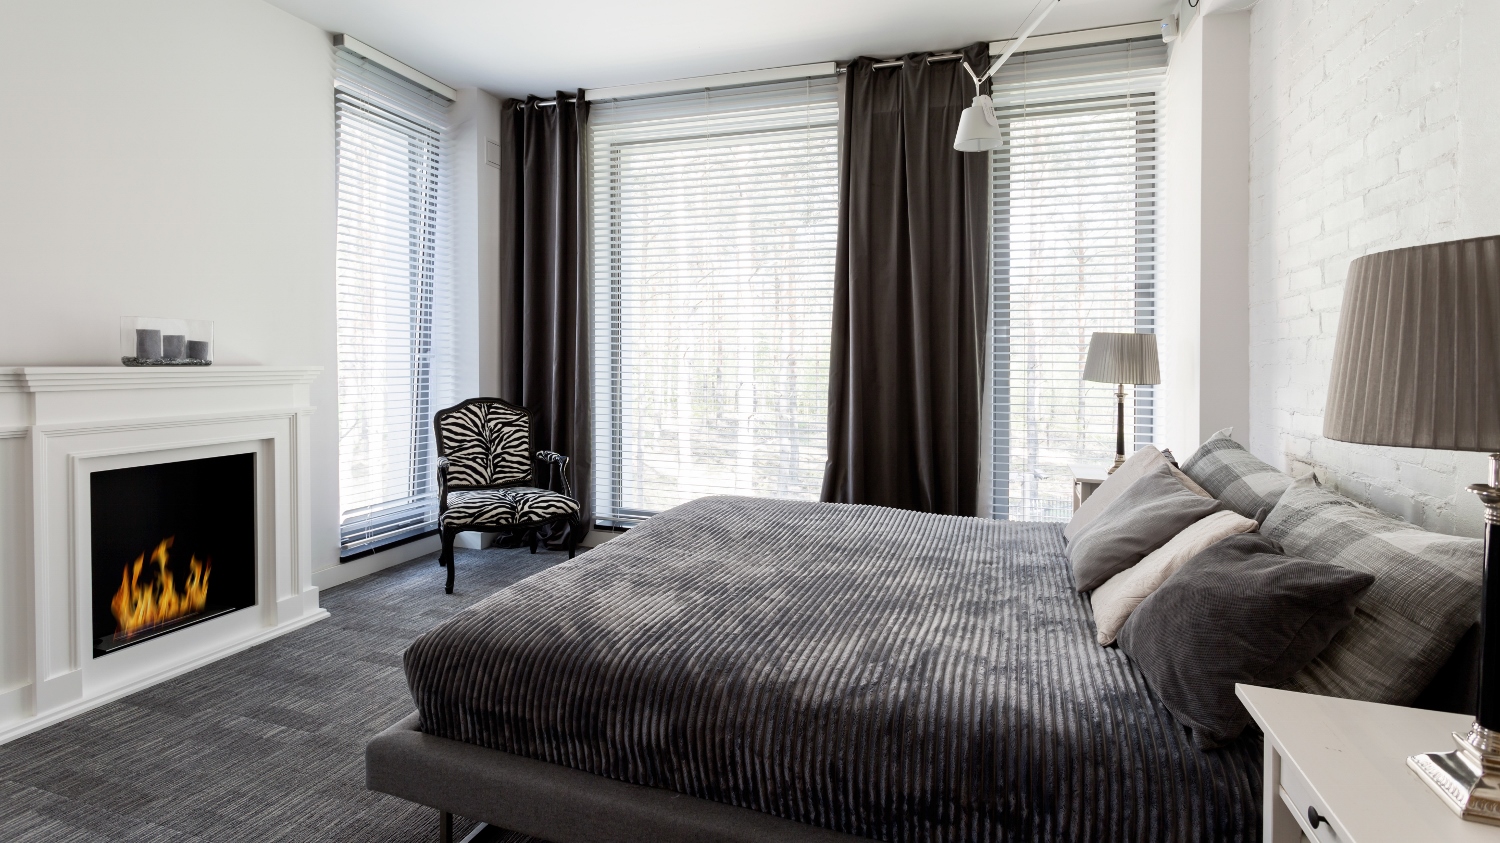 Charlene Cardow RE/MAX Twin City Kitchener Waterloo Real Estate - Fancy Bedroom